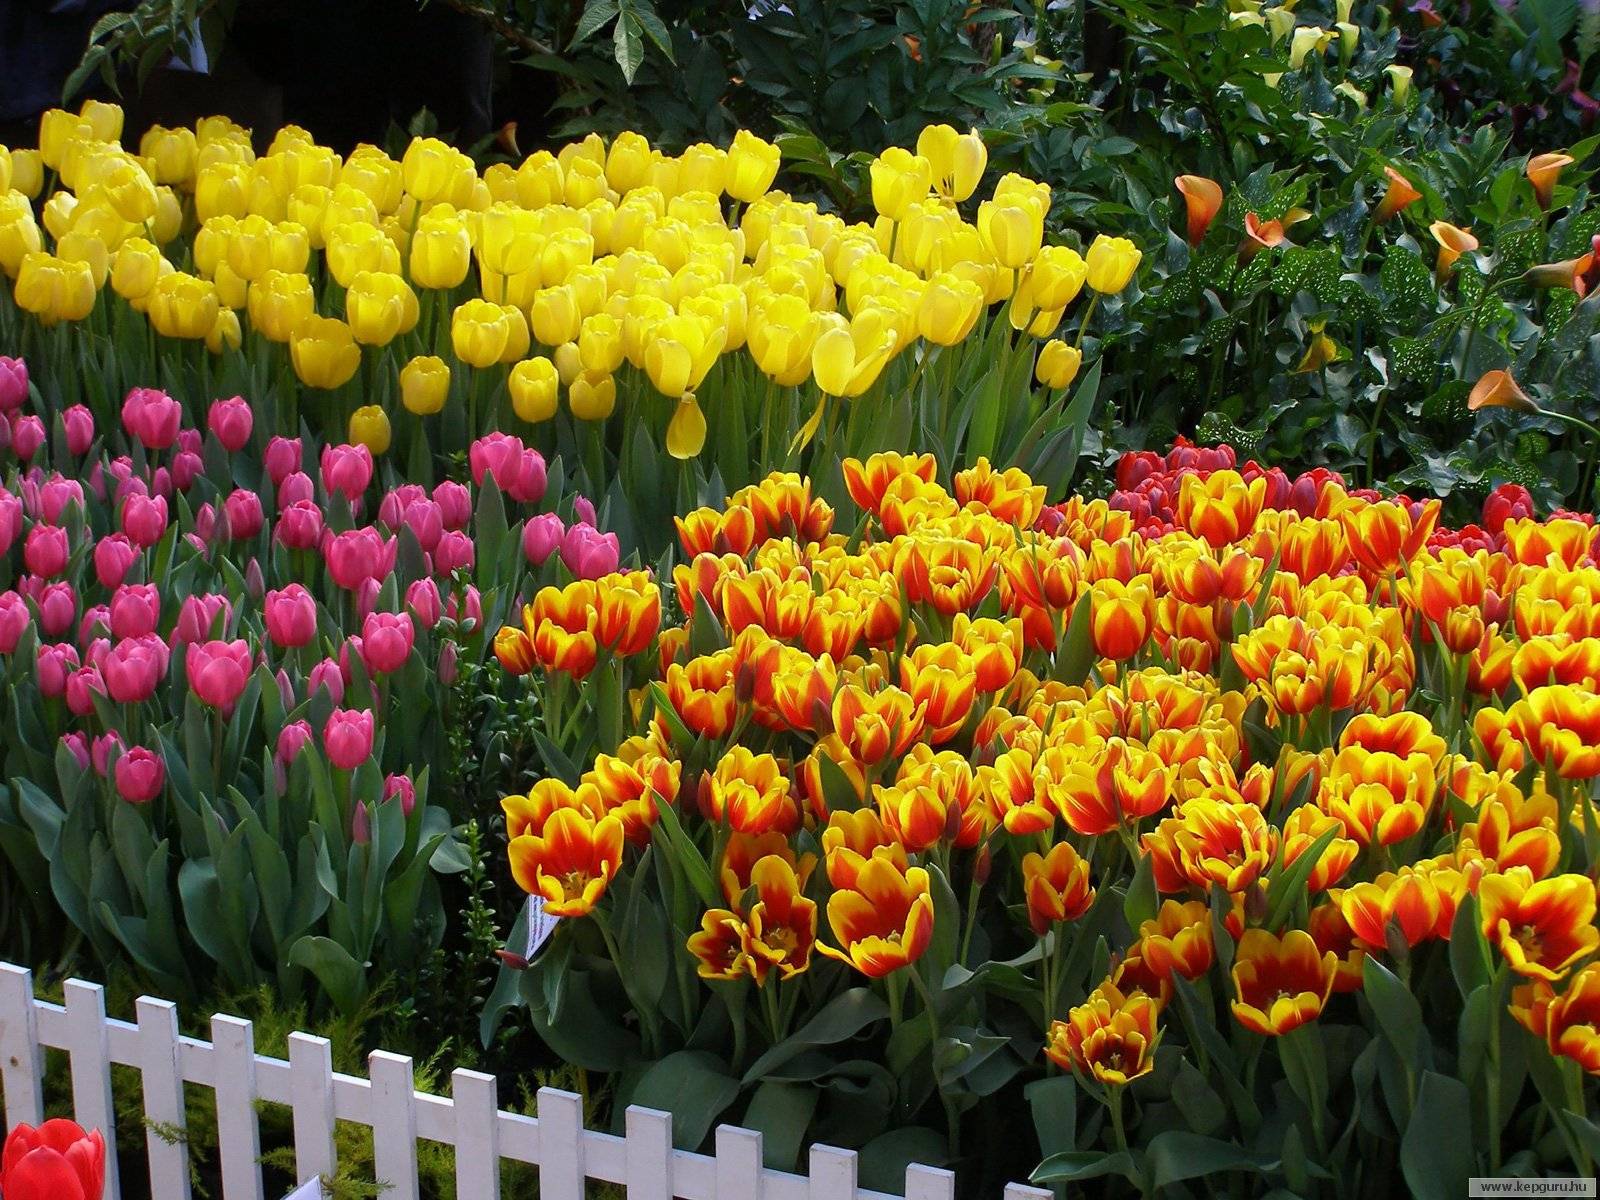 Цветы для посадки на клумбе весной, с фото и описанием